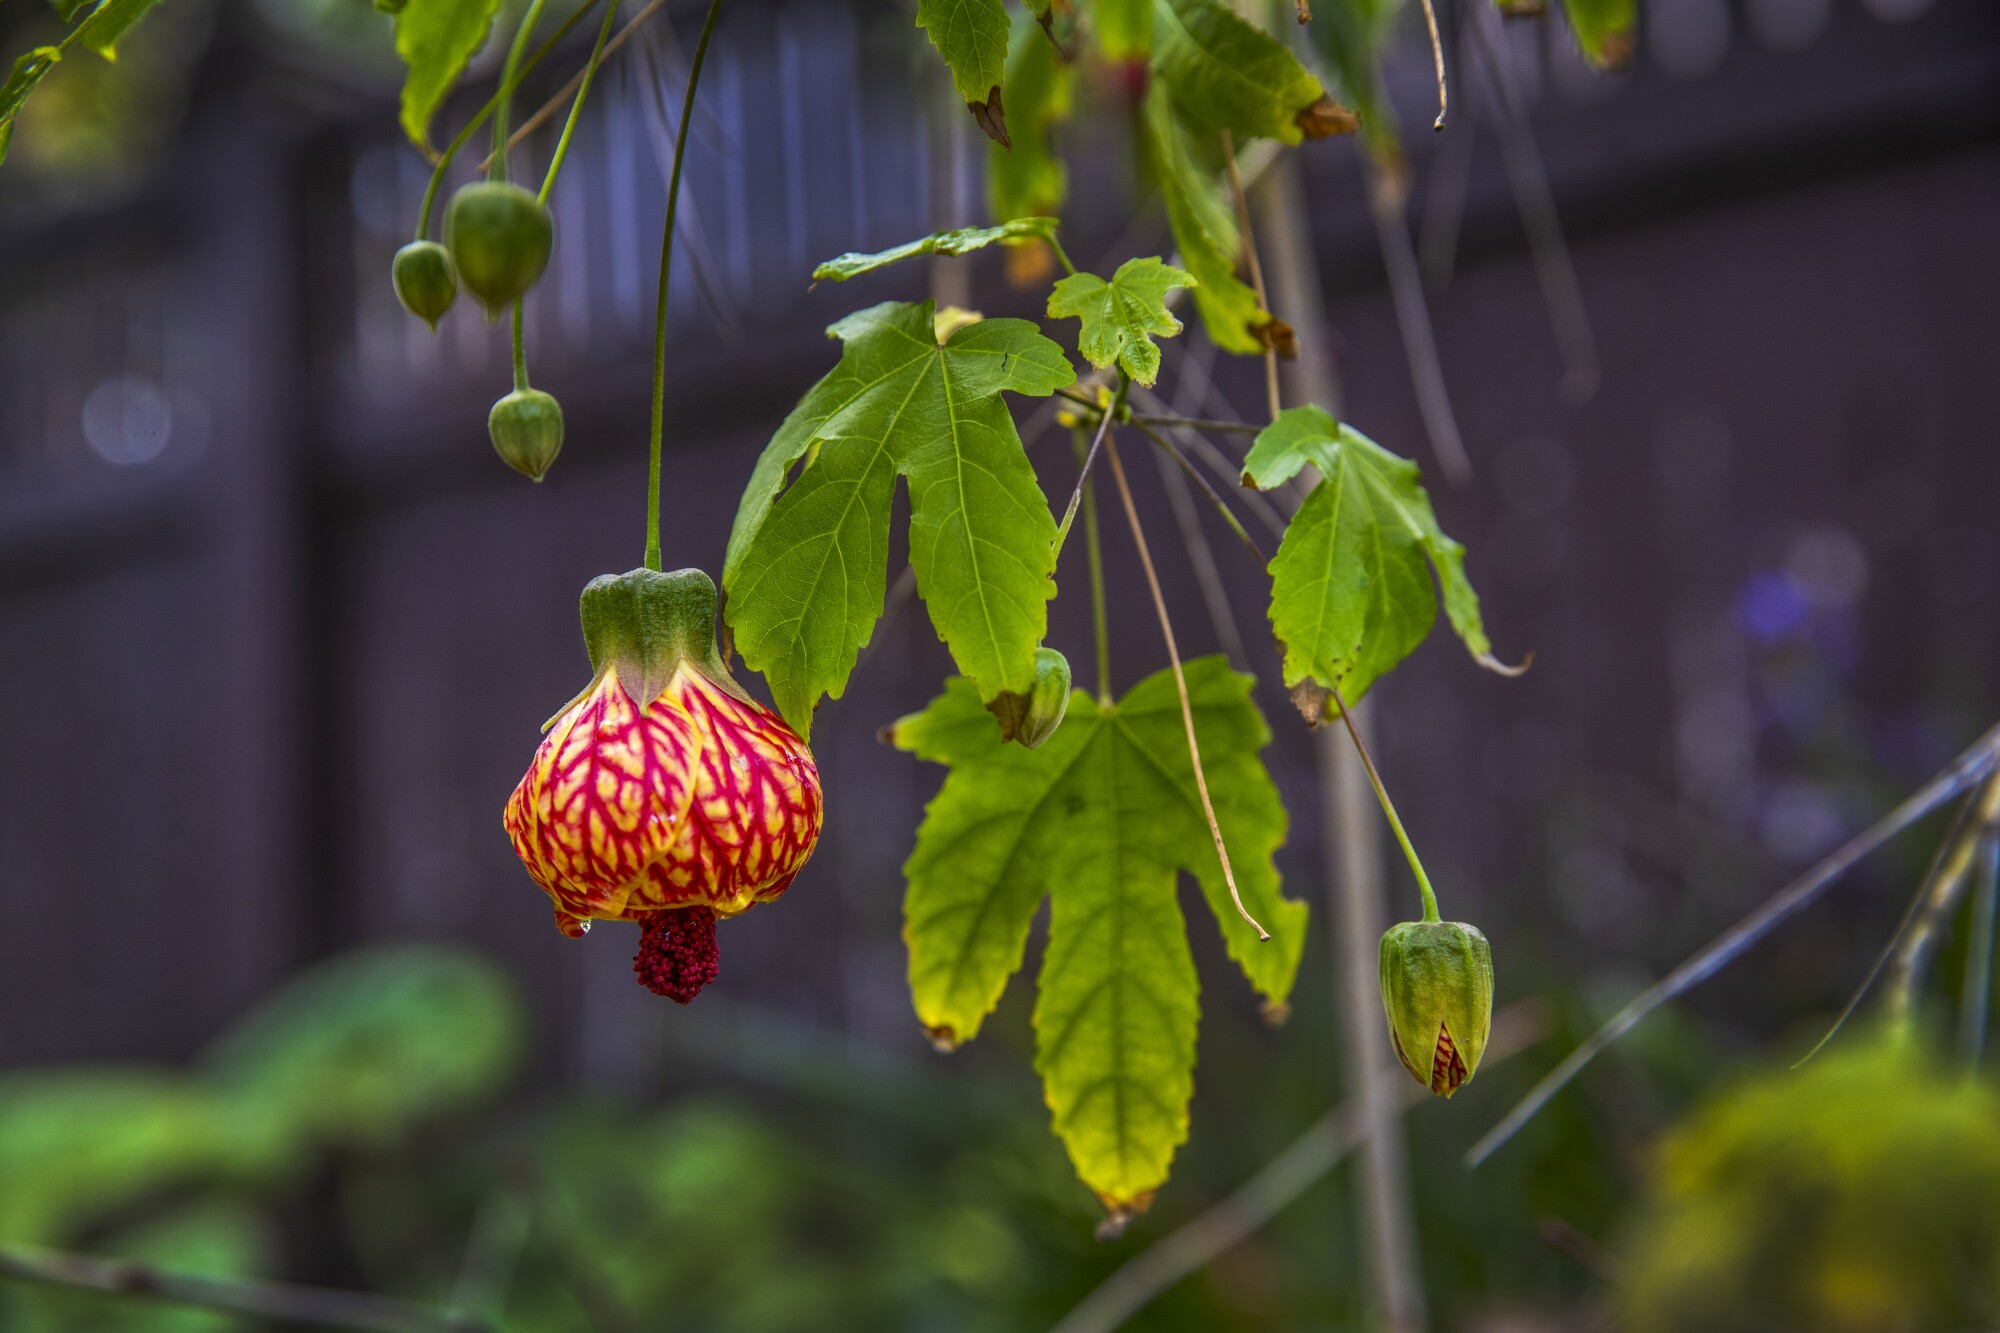 A red and yellow striped Chinese lantern flower (Physalis alkekengi) hangs upside down.